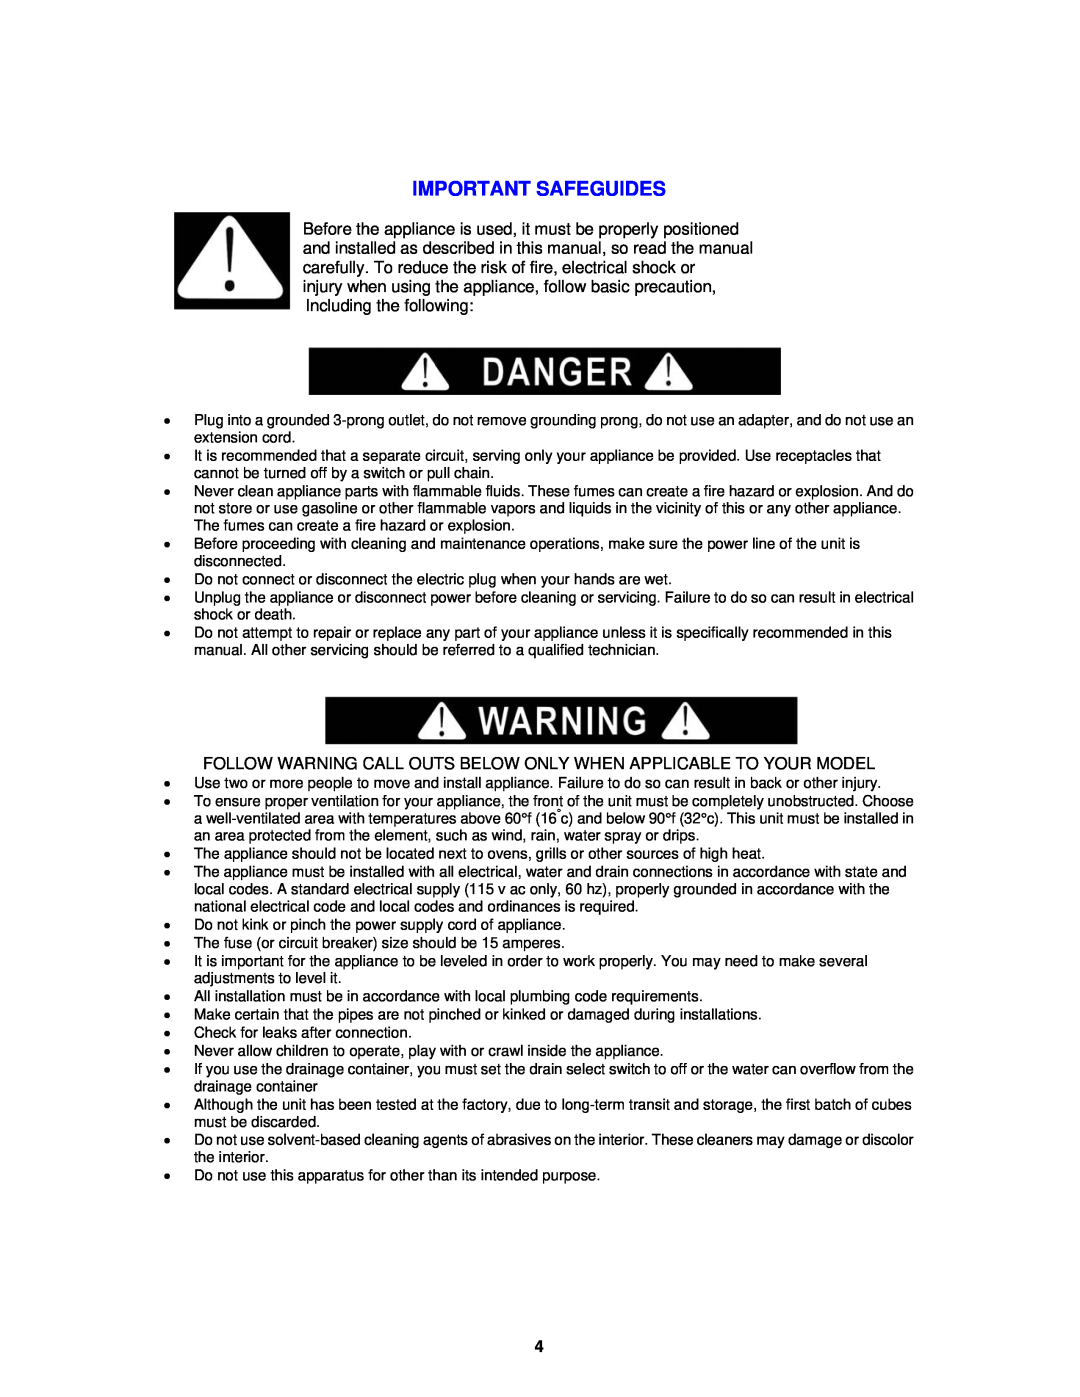 Avanti IMD250 instruction manual Important Safeguides 